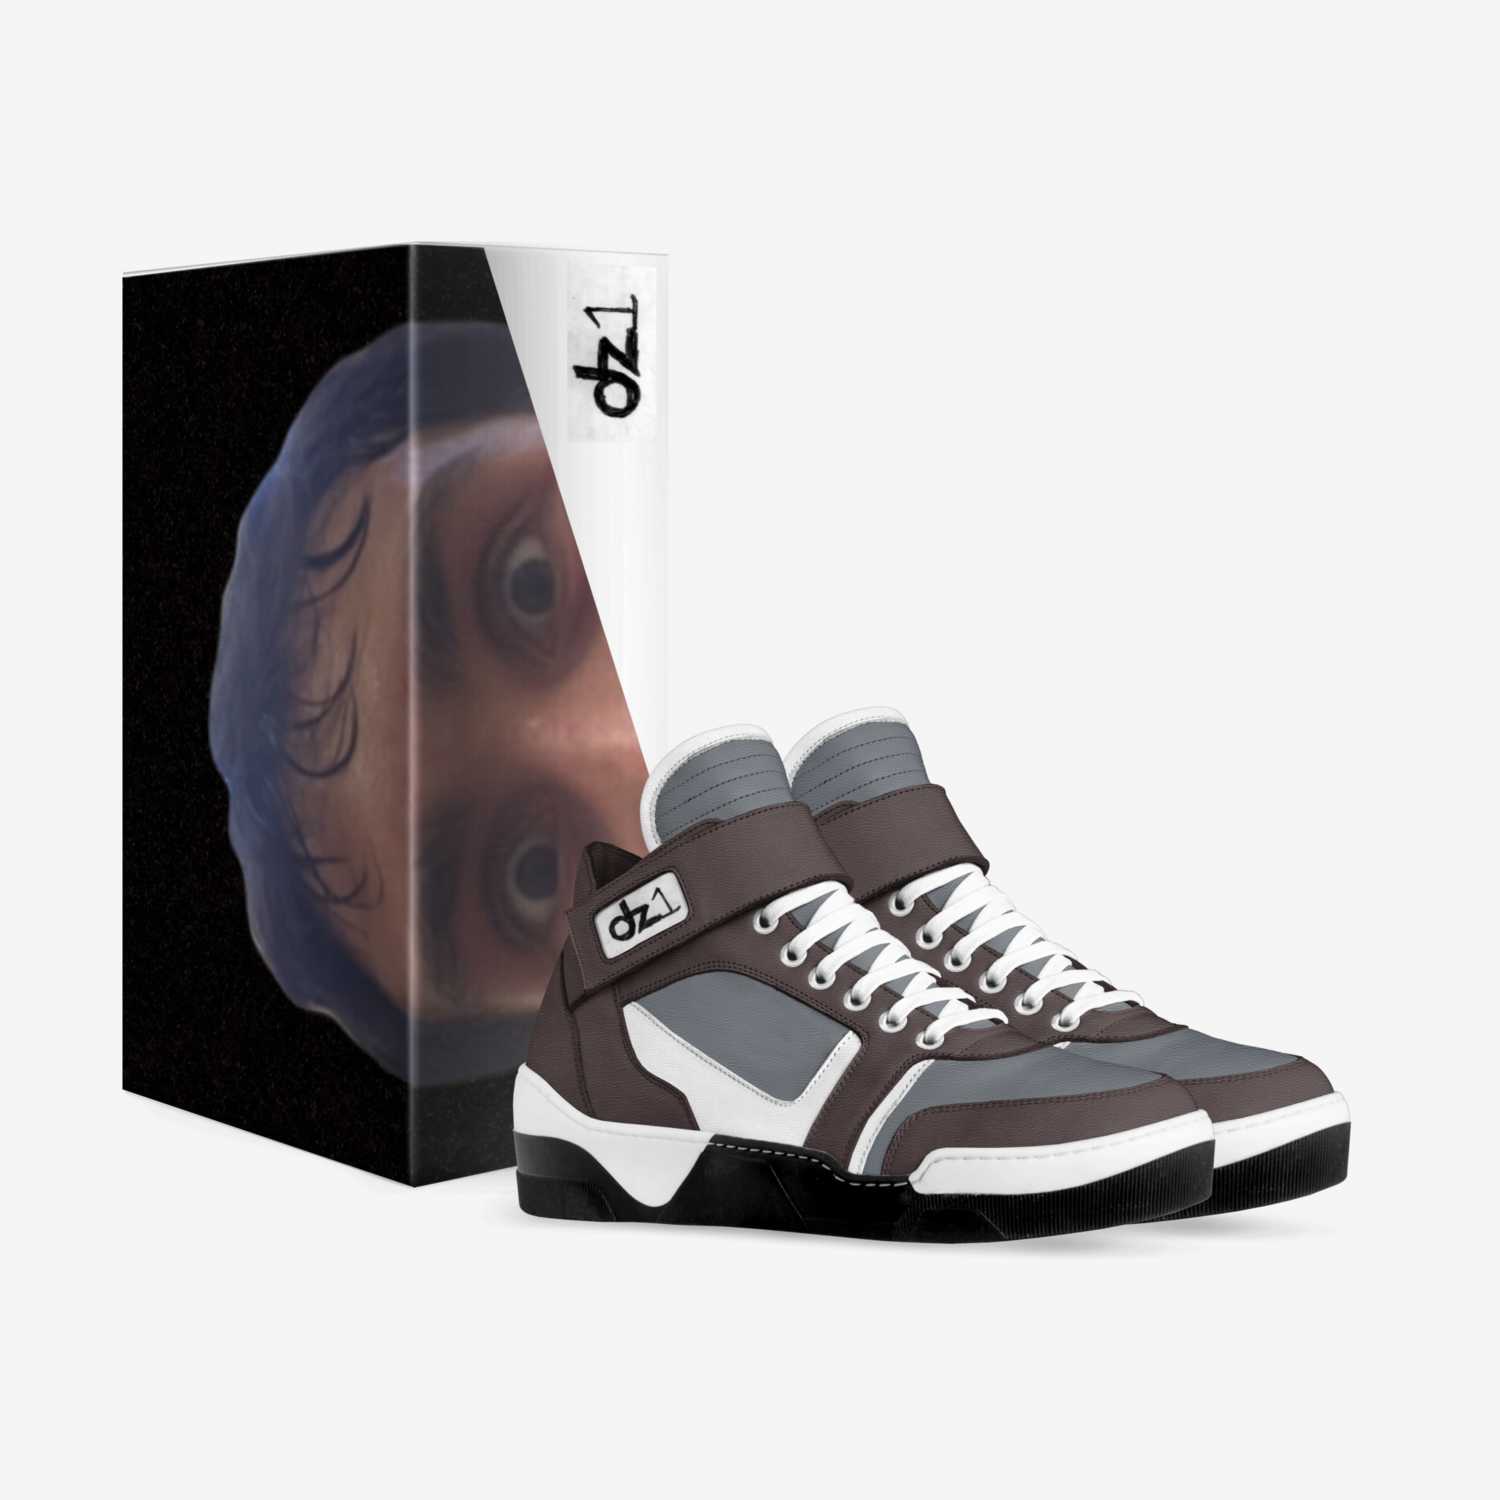 DZ1 custom made in Italy shoes by Garrett K | Box view